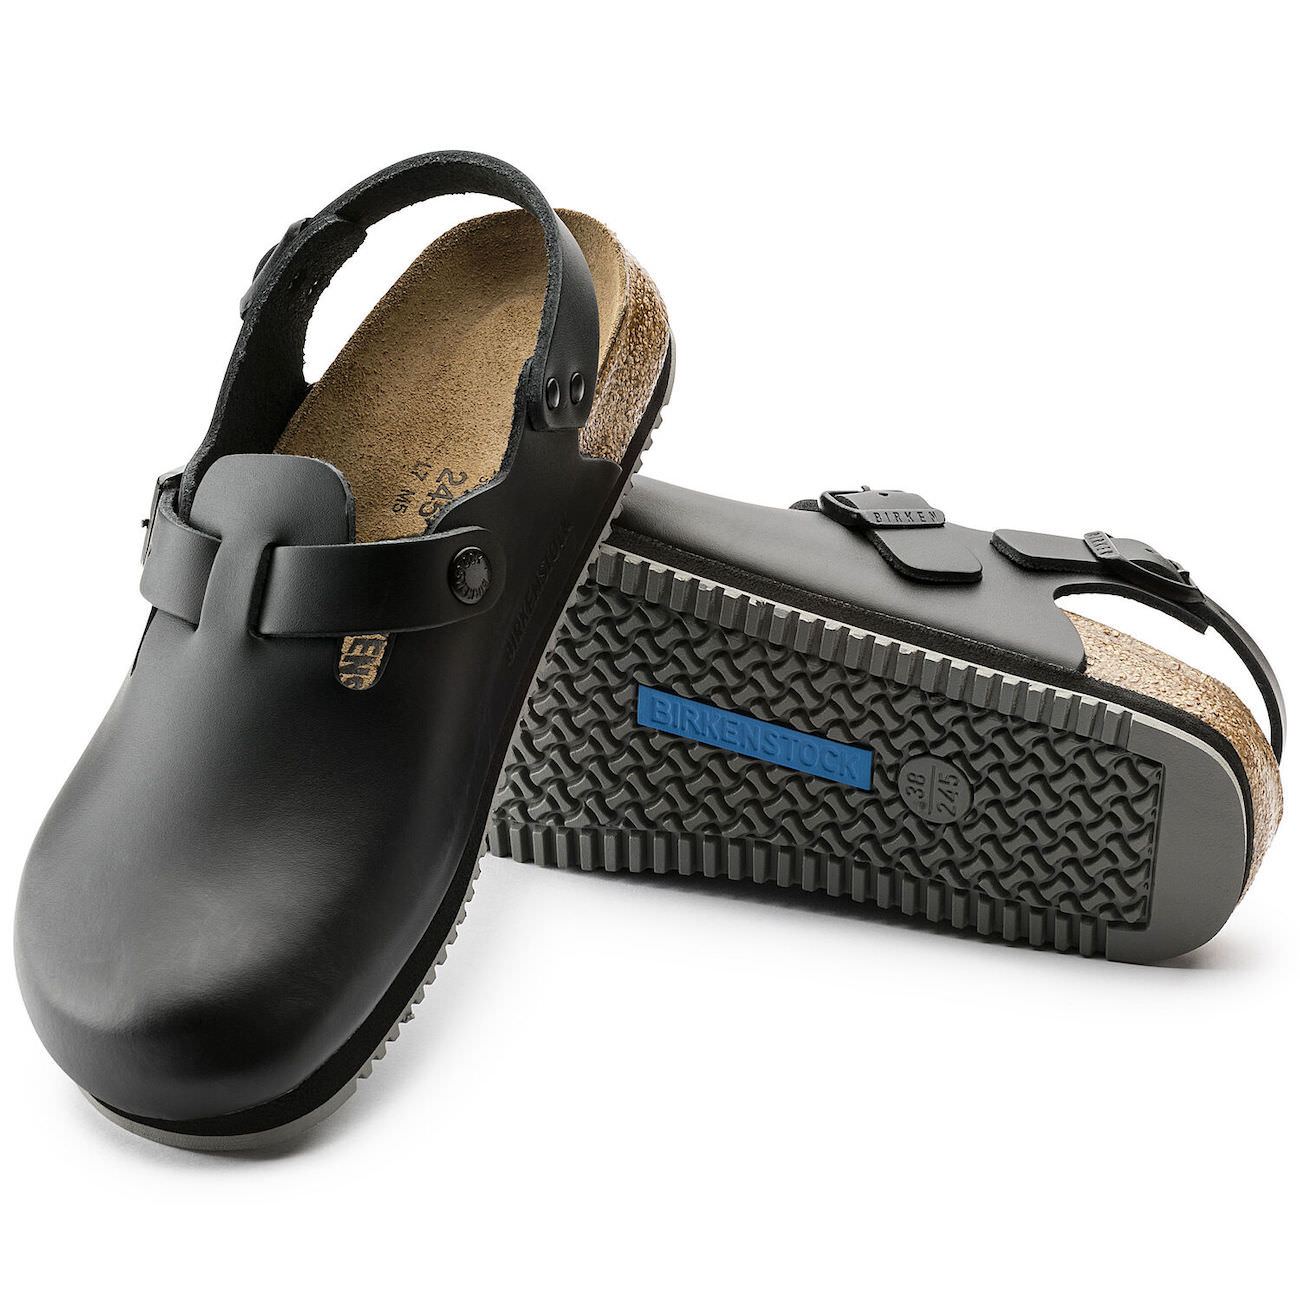 birkenstock tokyo super grip leather work shoe